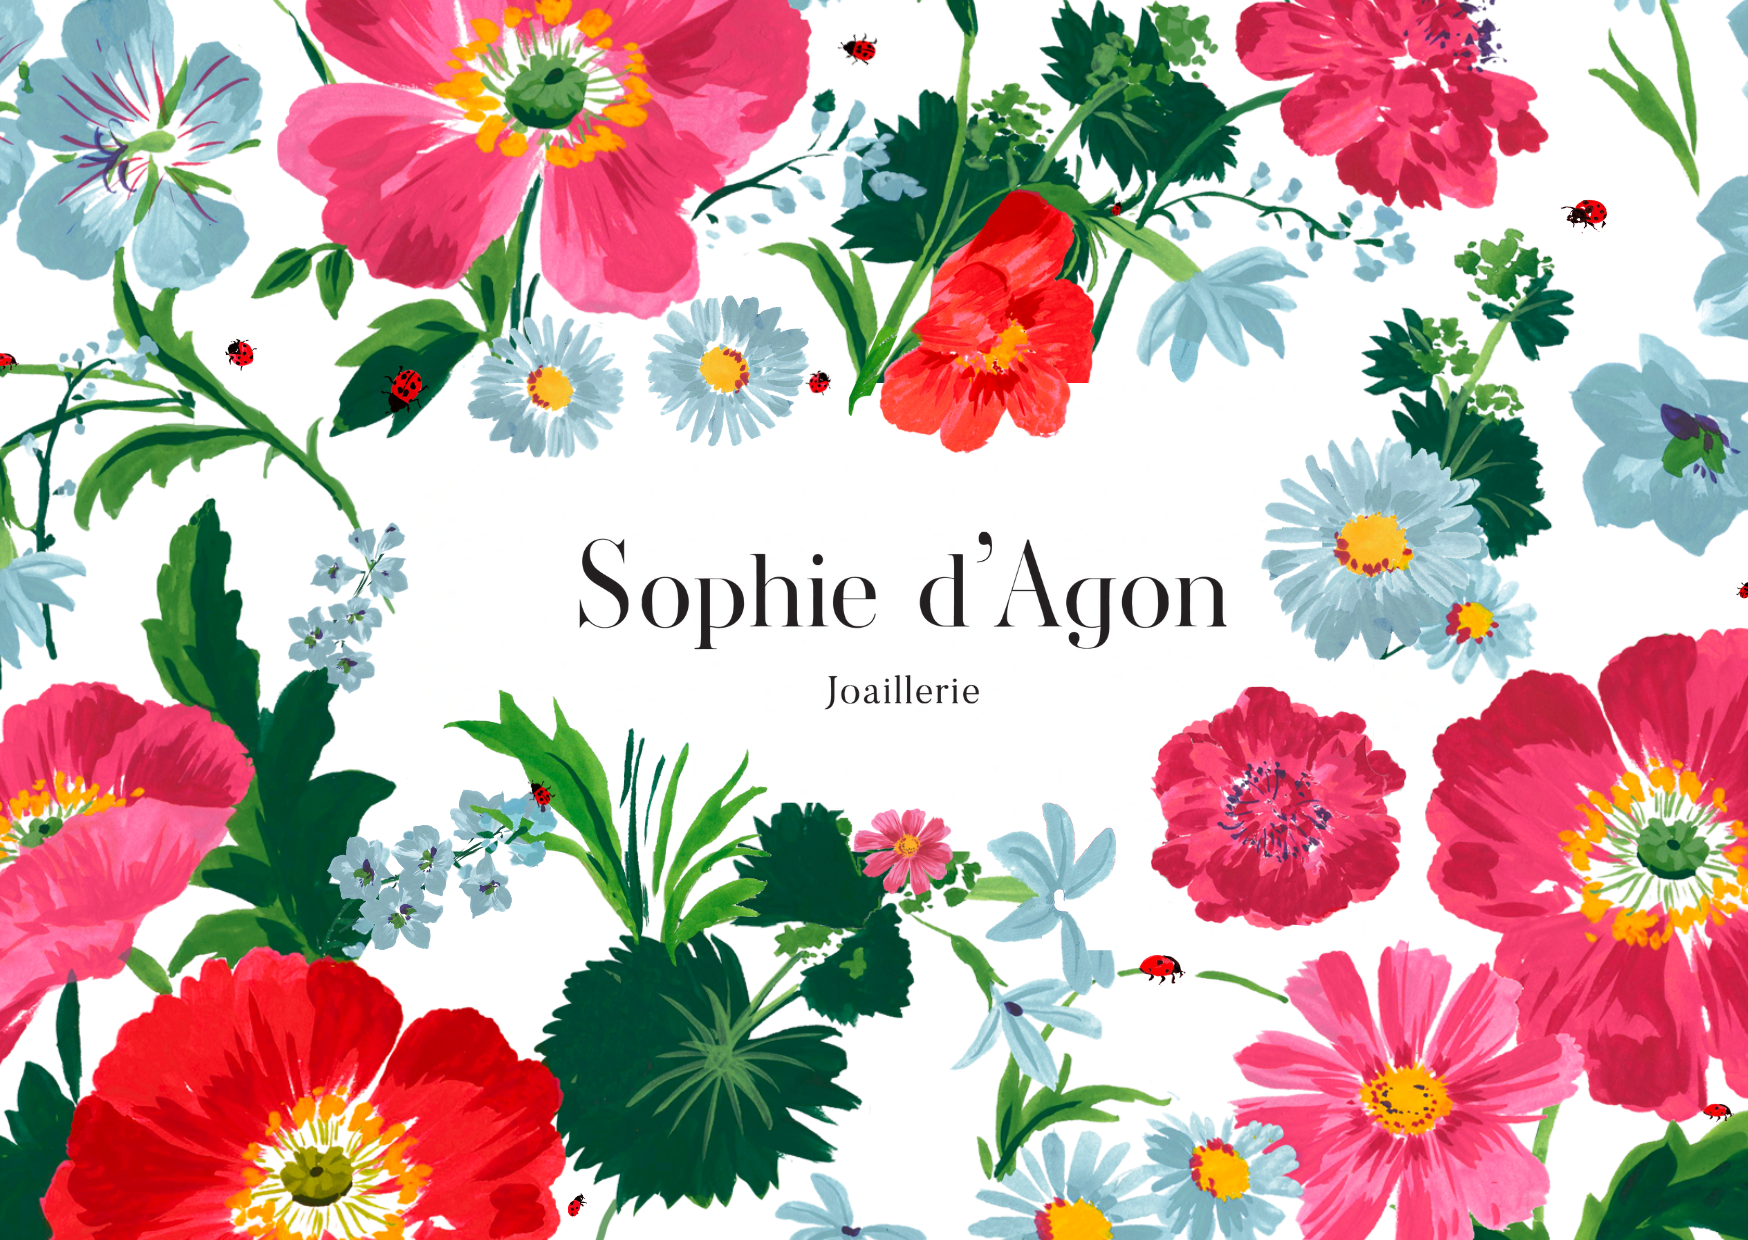 Sophie d'Agon gift card